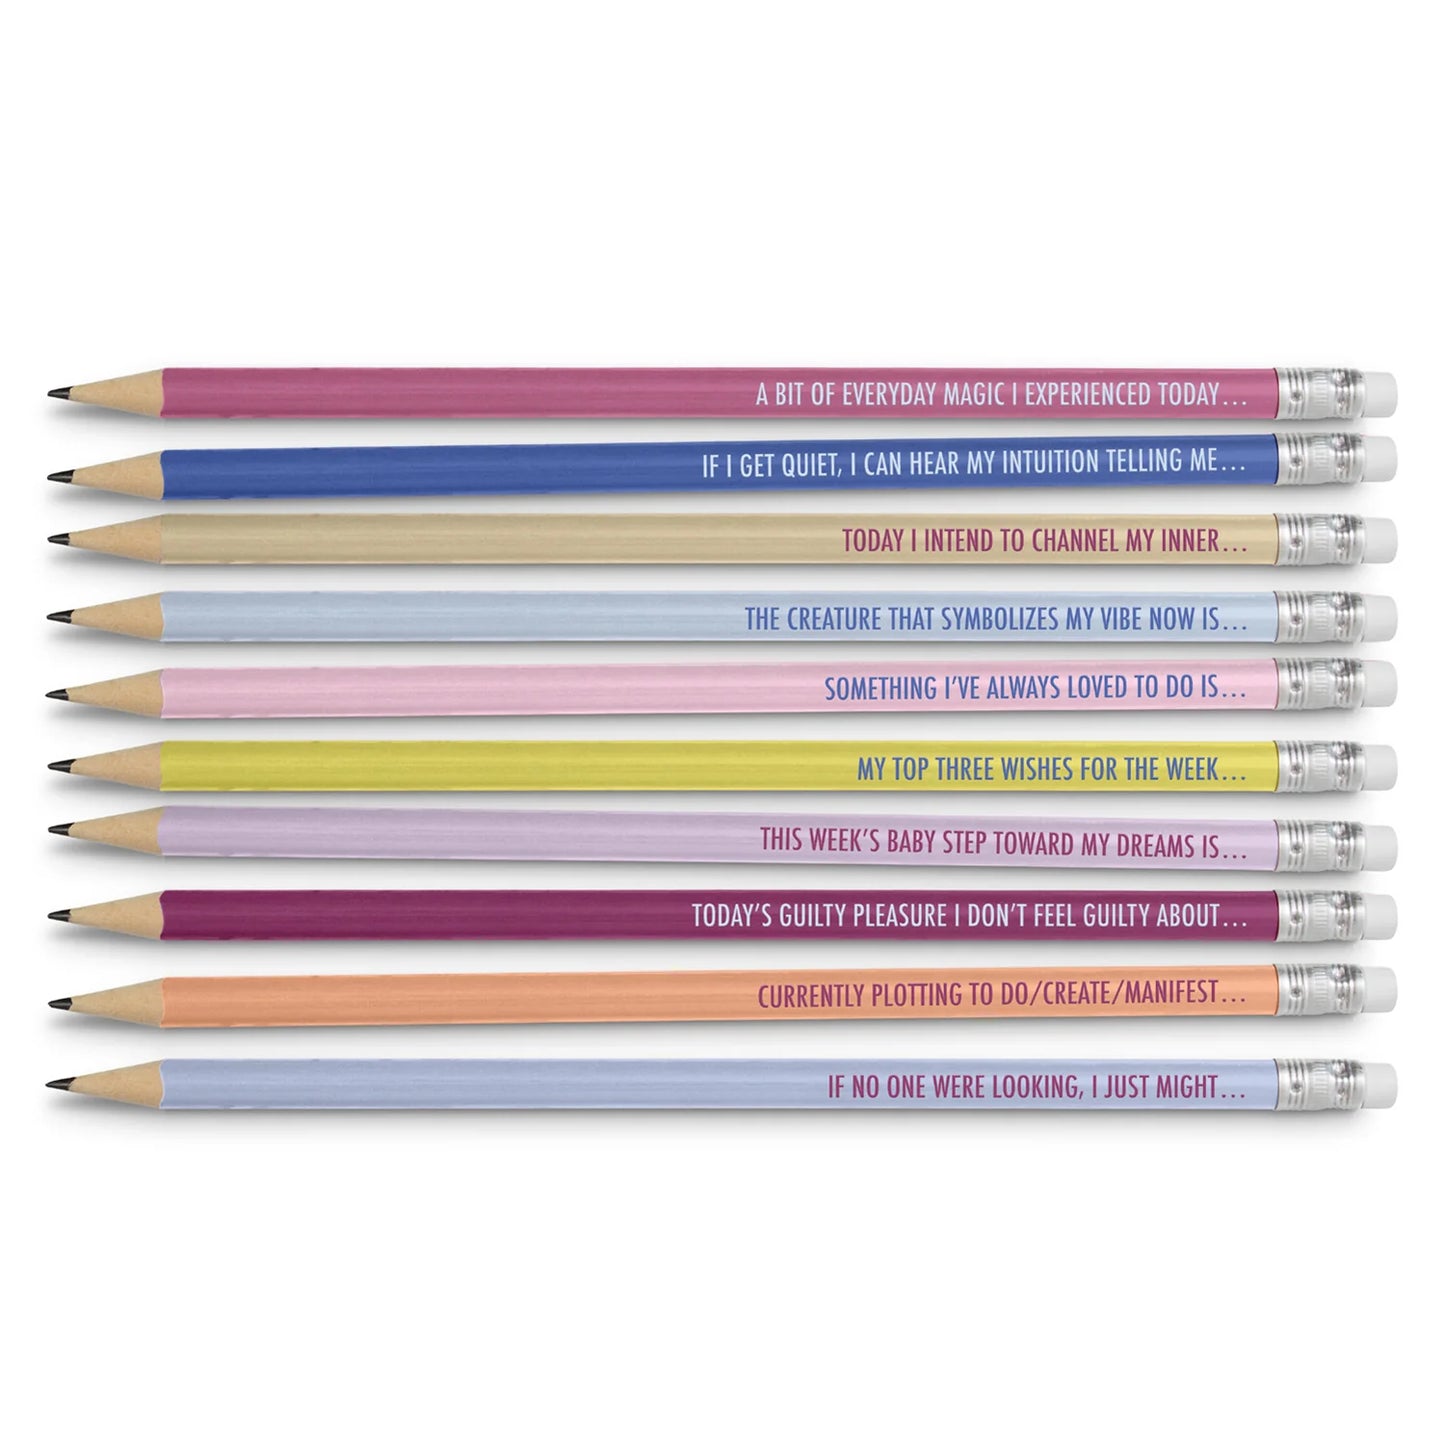 Intuitive Journaling Pencil Set - Wishes, Secrets & Dreams